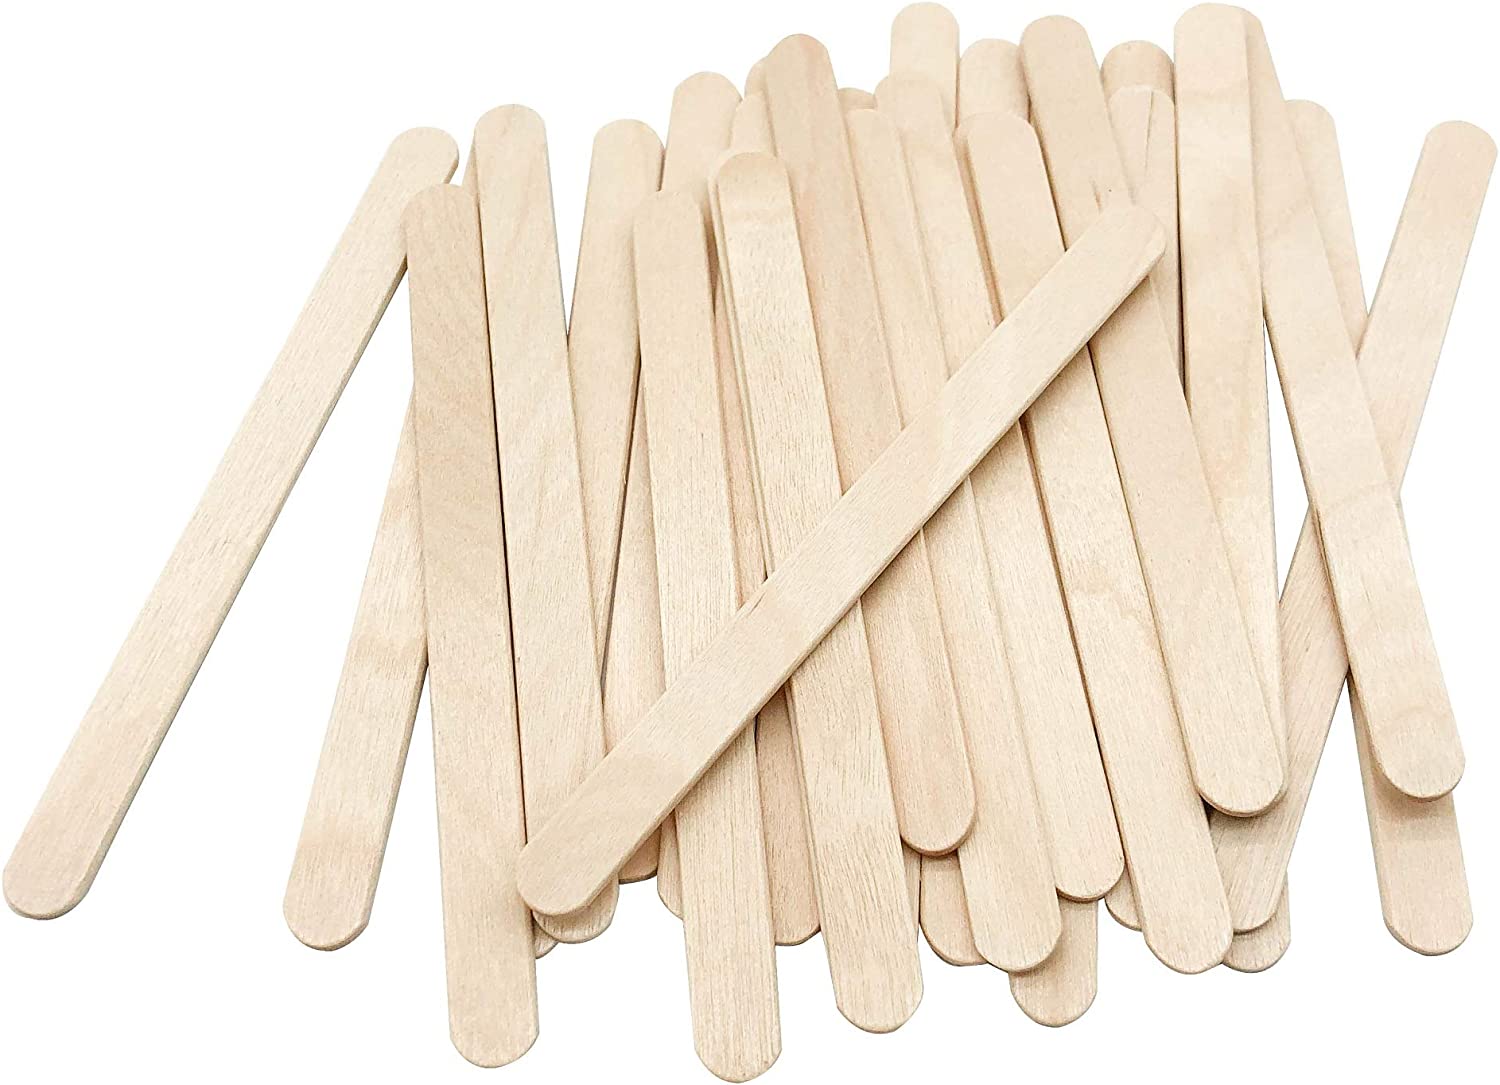 wooden popsicle sticks